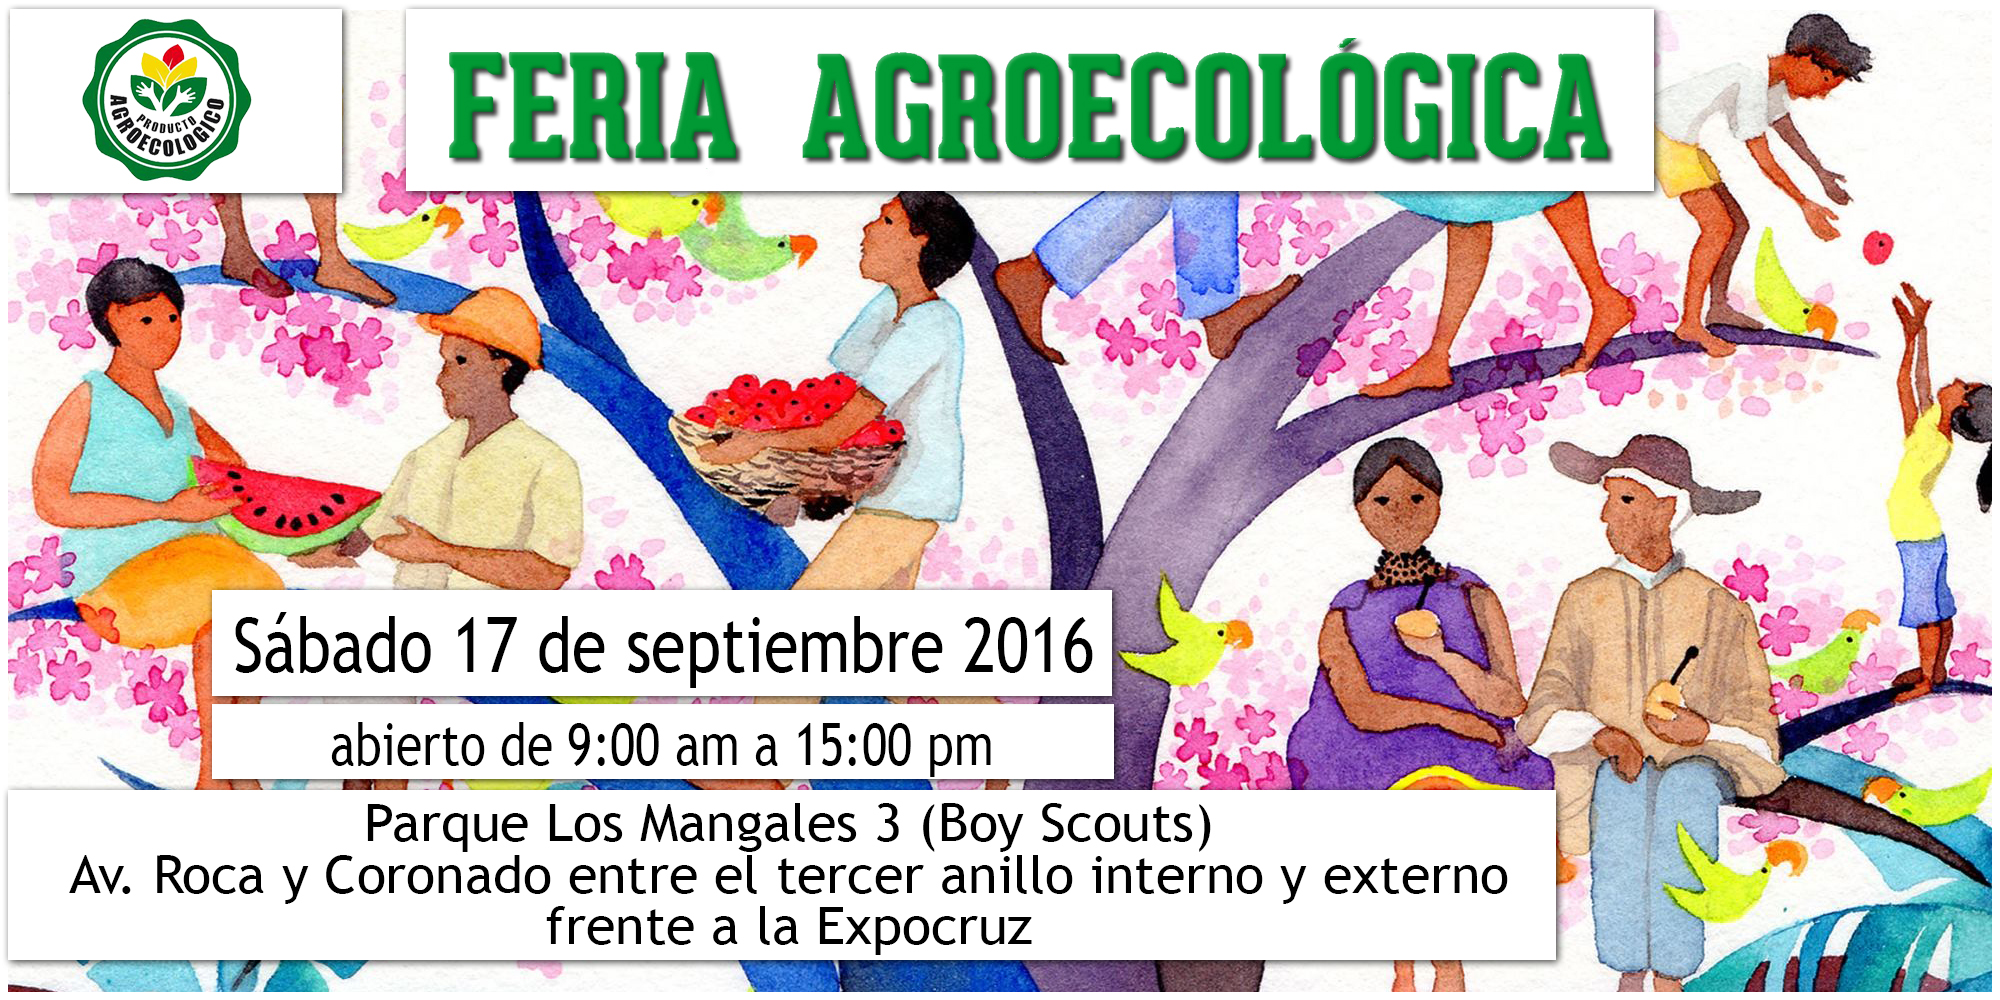 4_Feria_Agroecológica_Evento_Facebook.jpg